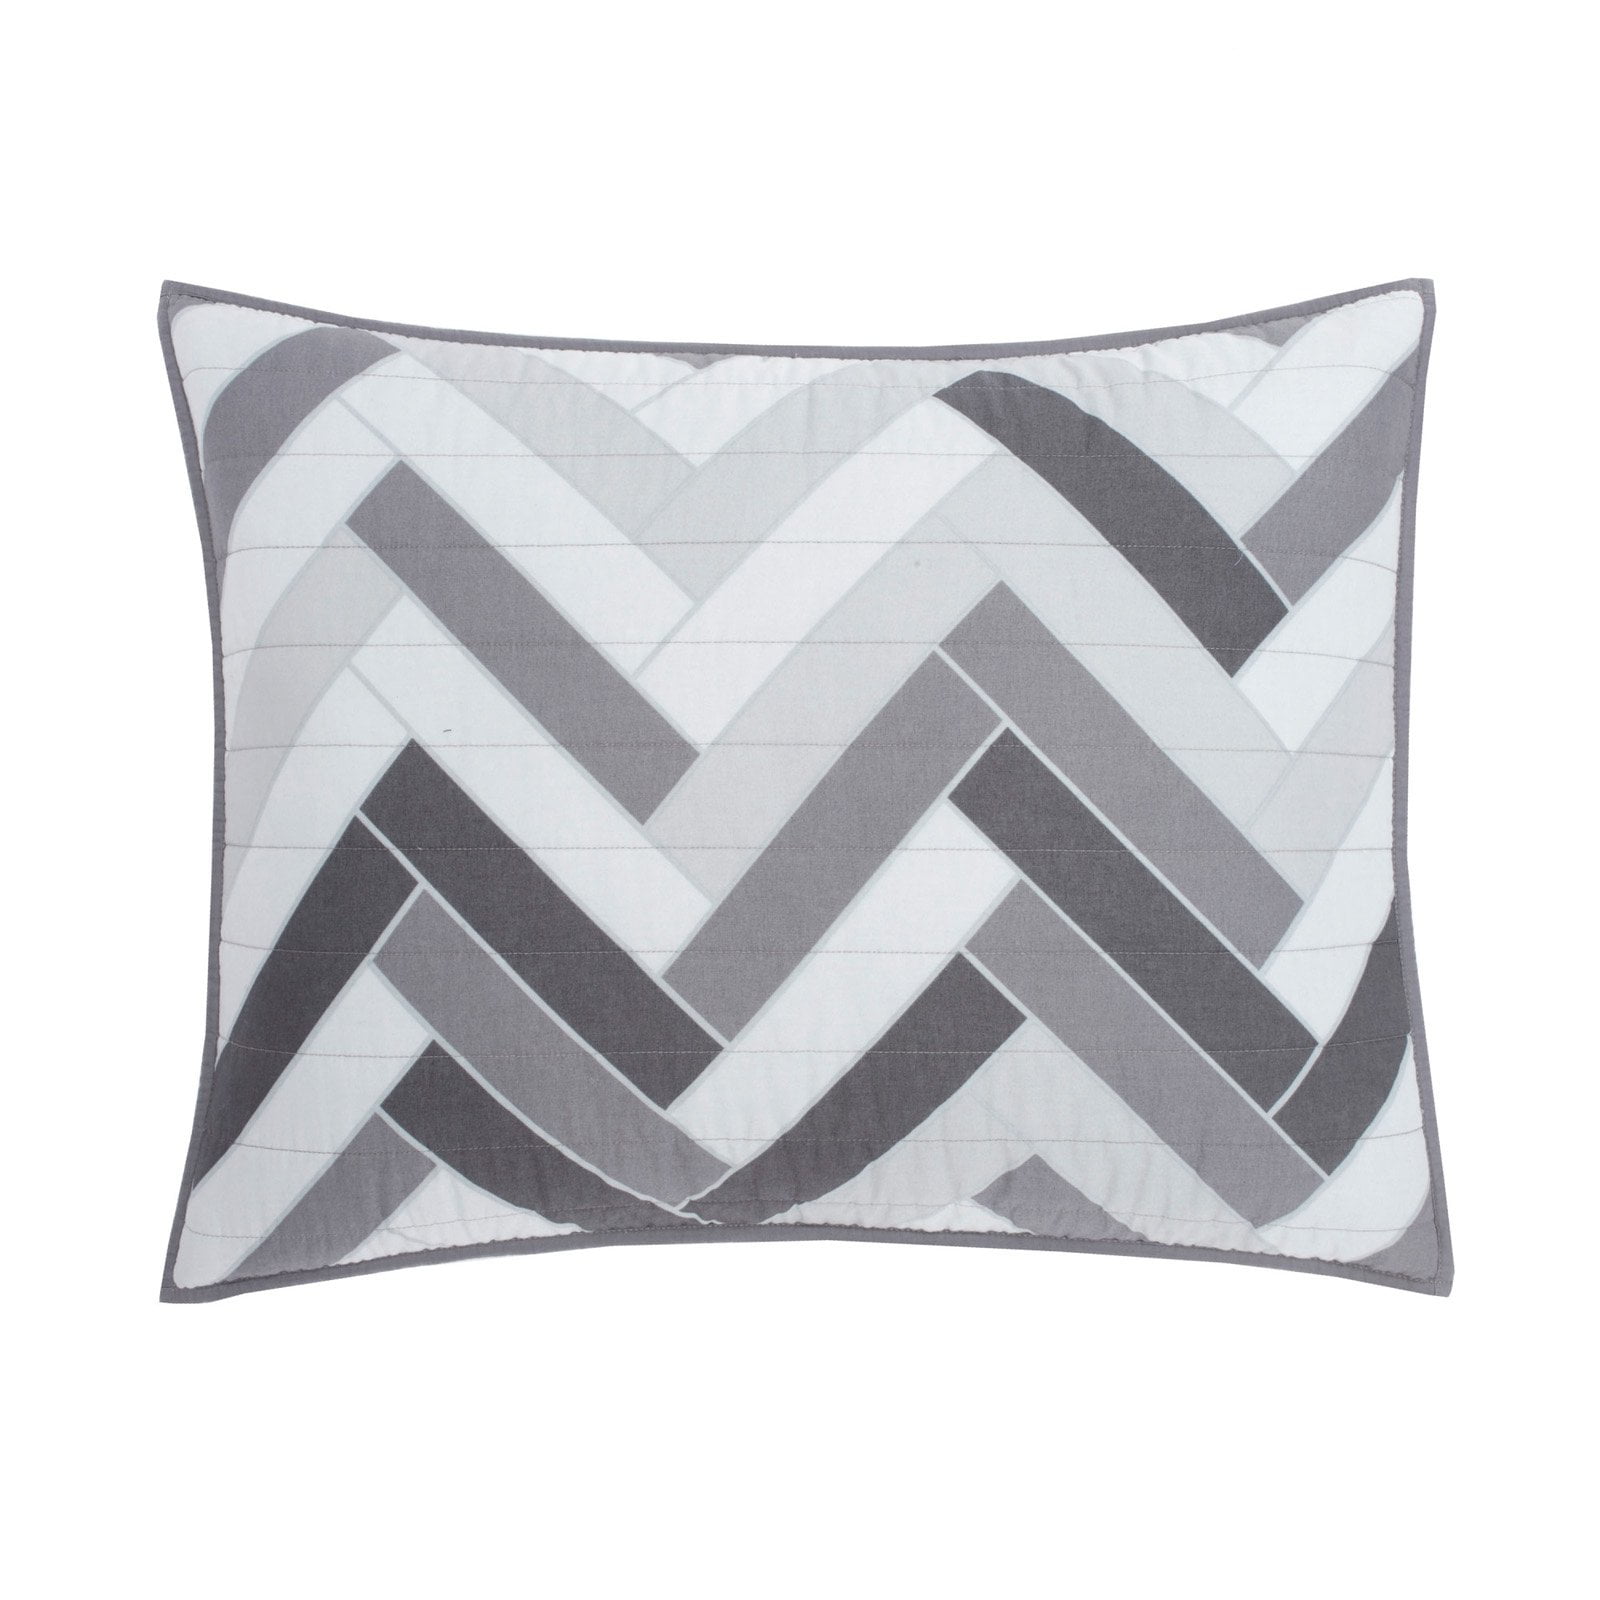 Details about   Izod Herringbone King Standard Pillow Sham 20”x36” Frost Gray 